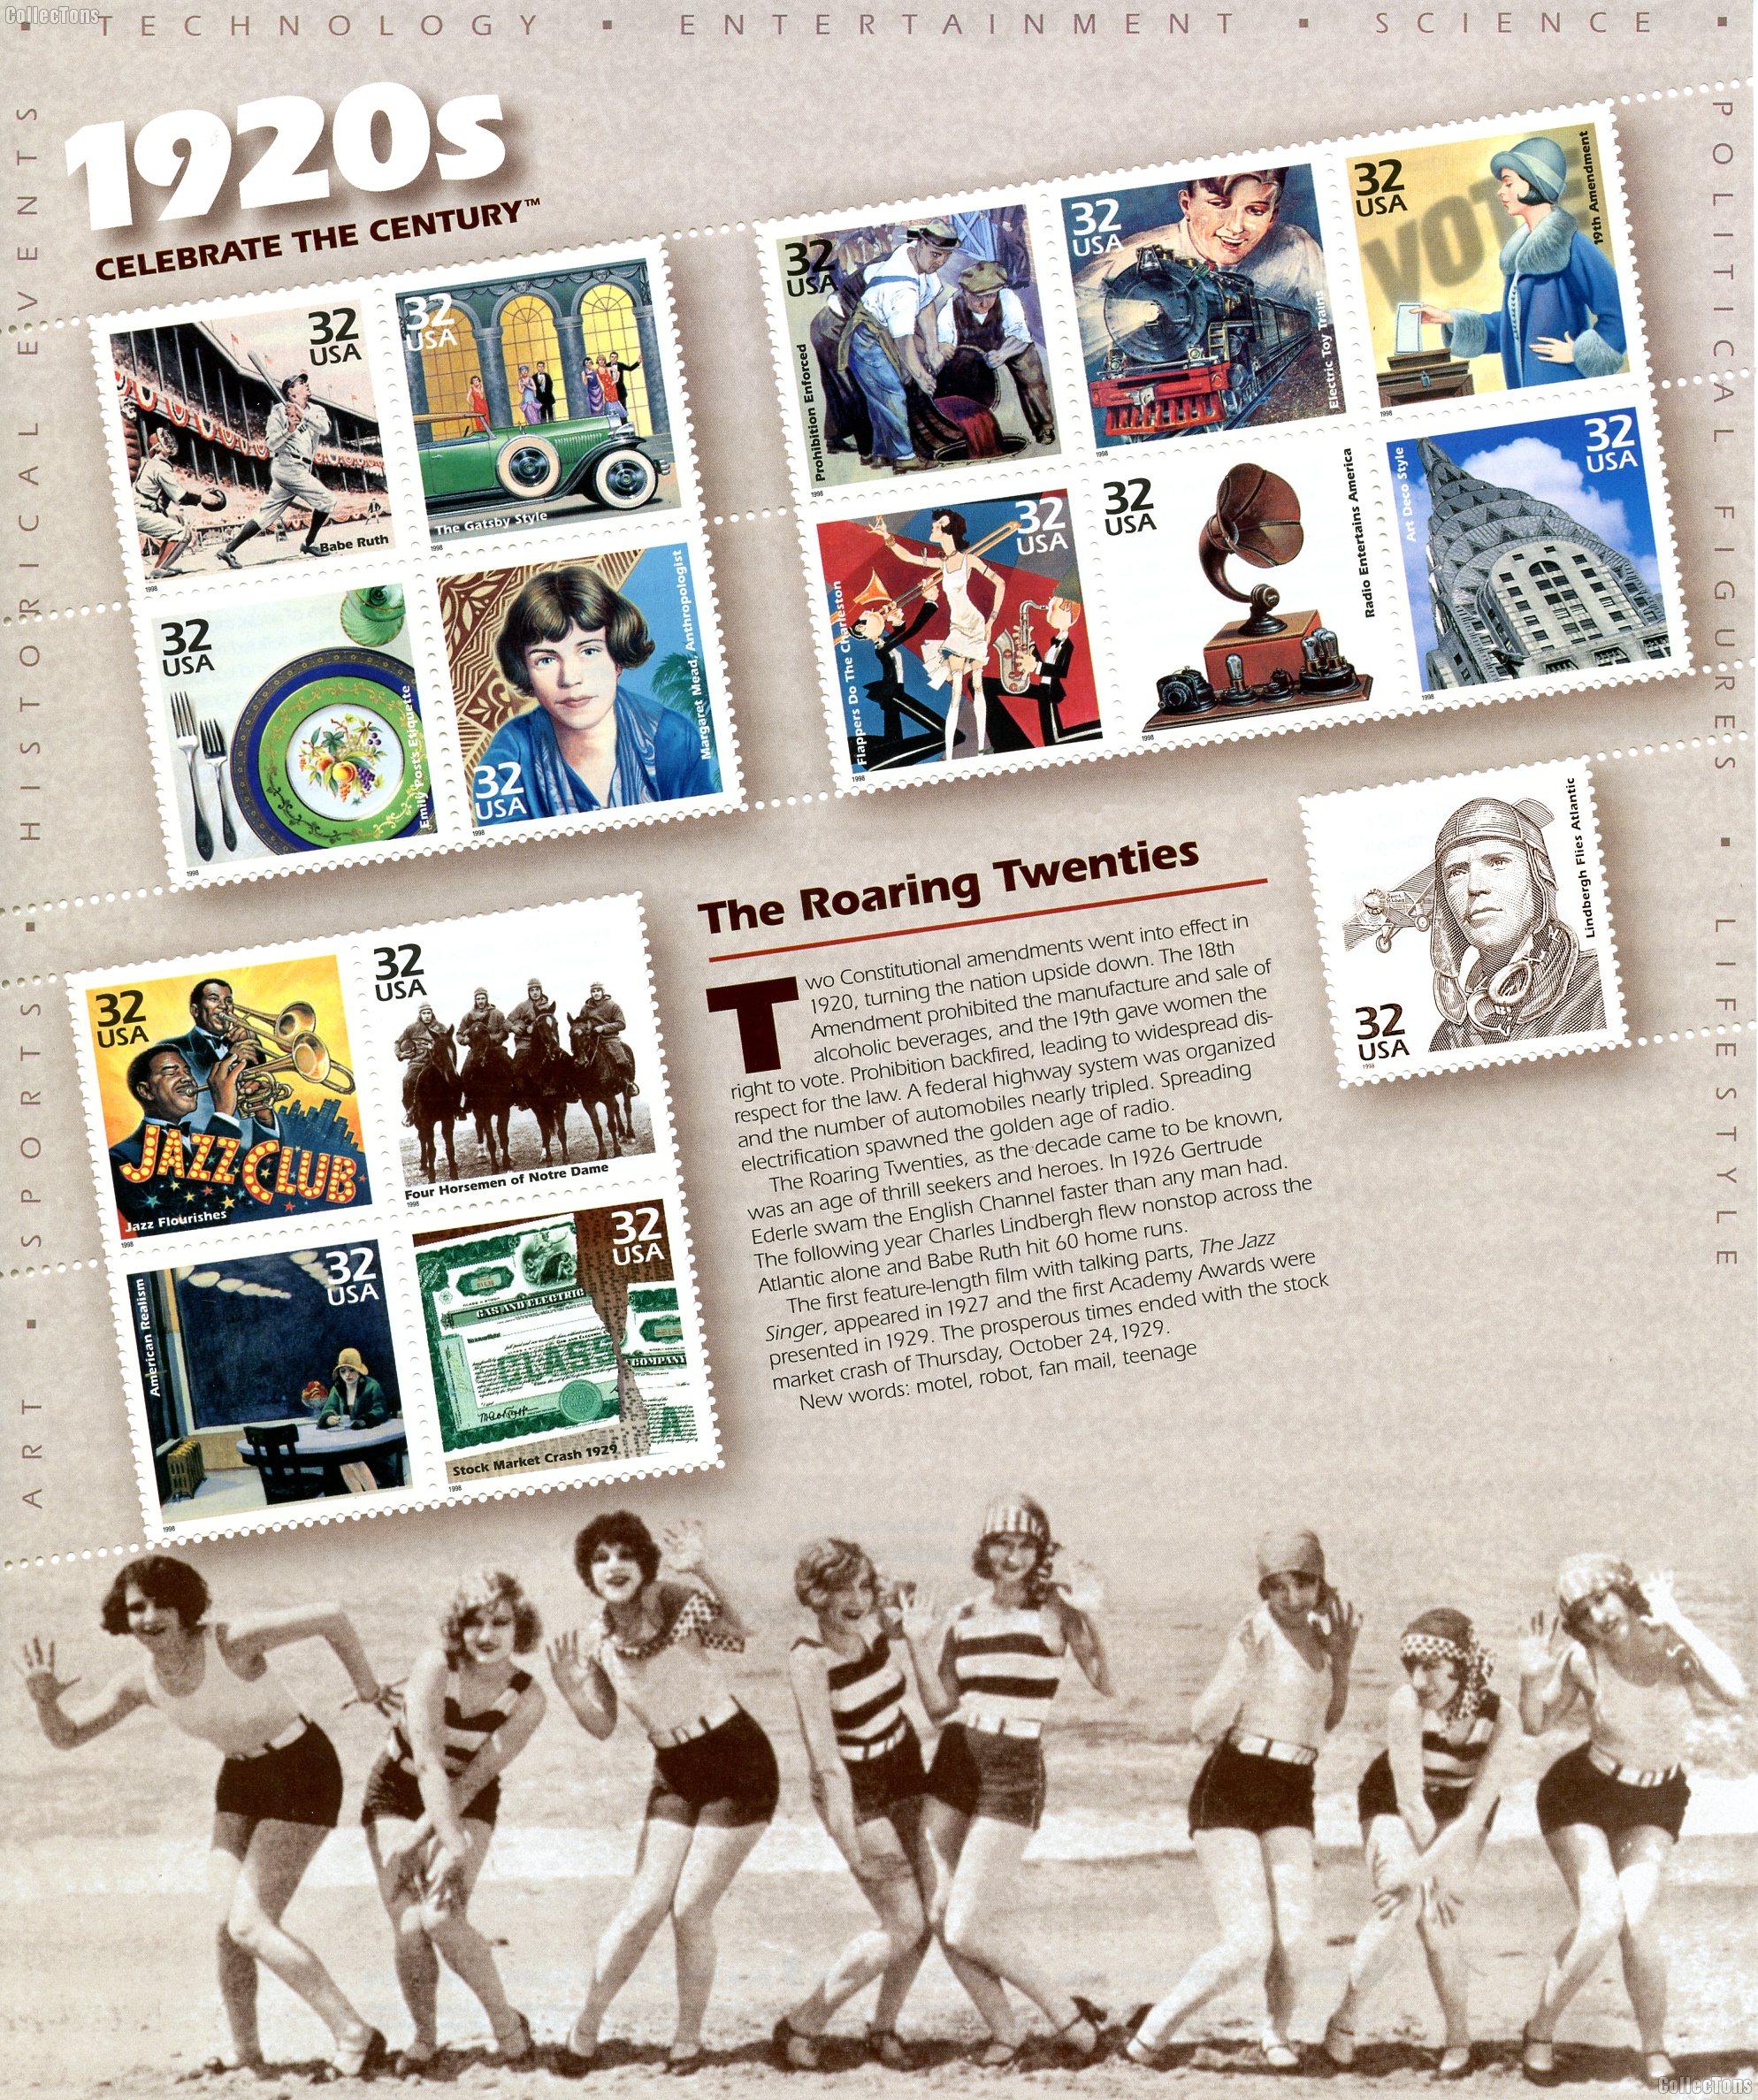 1998 1920s Celebrate the Century 32 Cent US Postage Stamp Unused Sheet of 15 Scott #3184